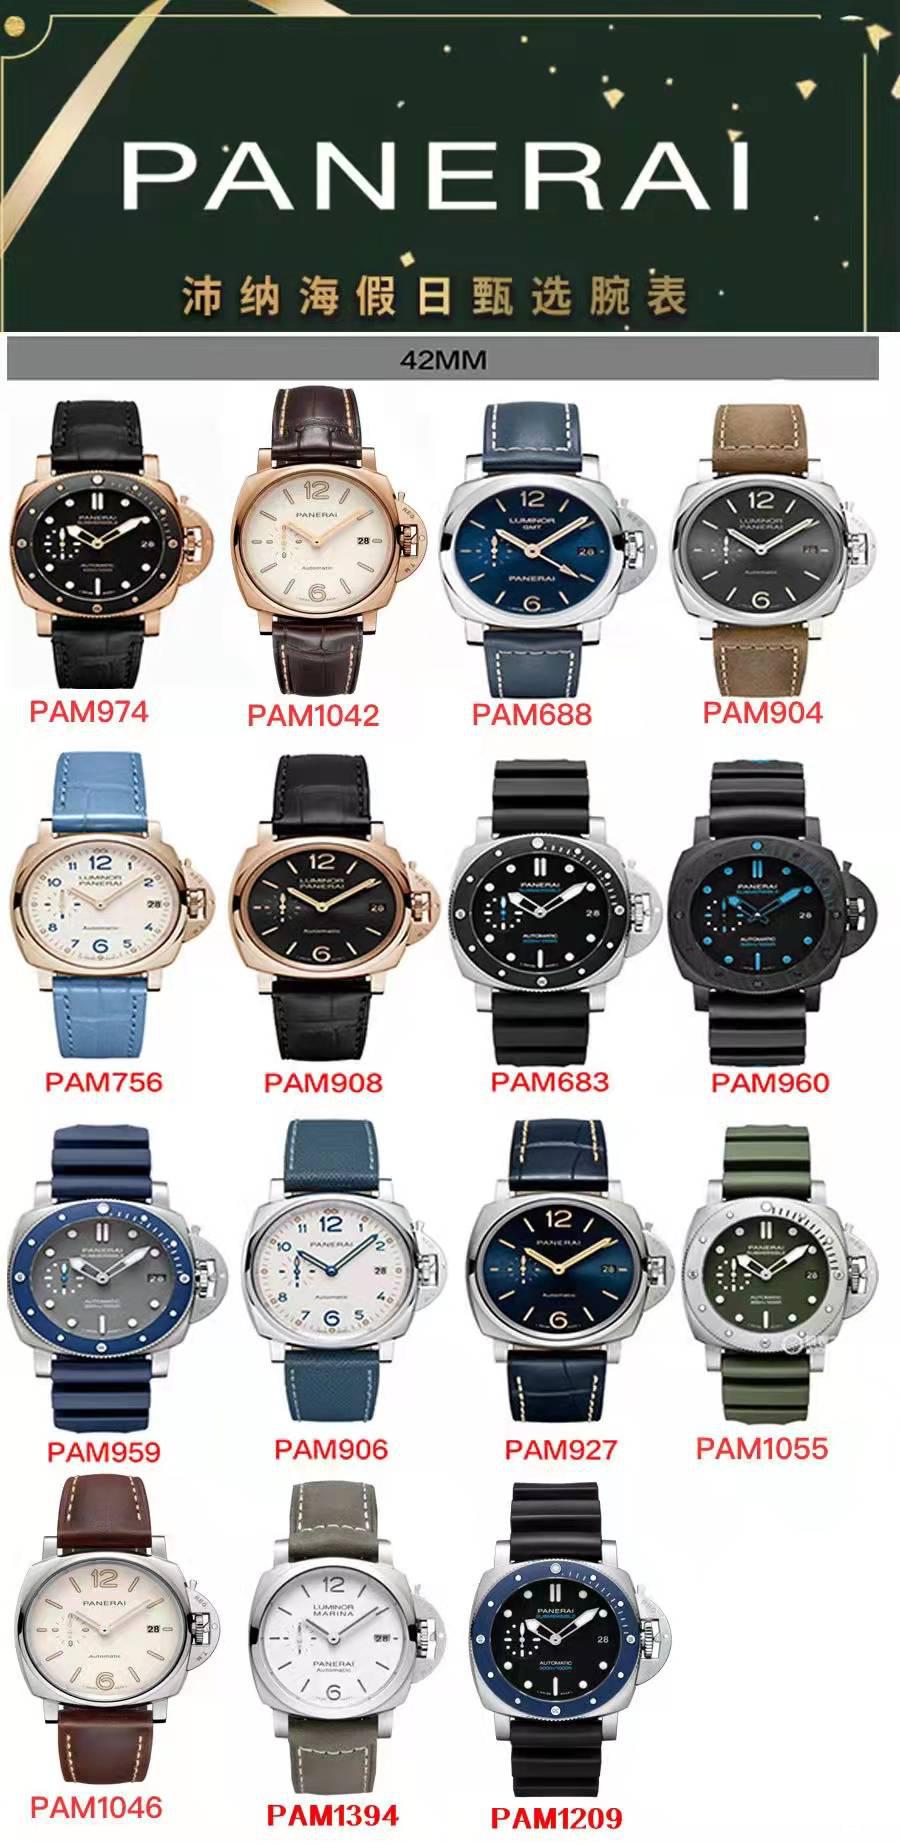 VS厂手表是什么意思-VS厂沛纳海欧米茄手表大揭秘-复刻表